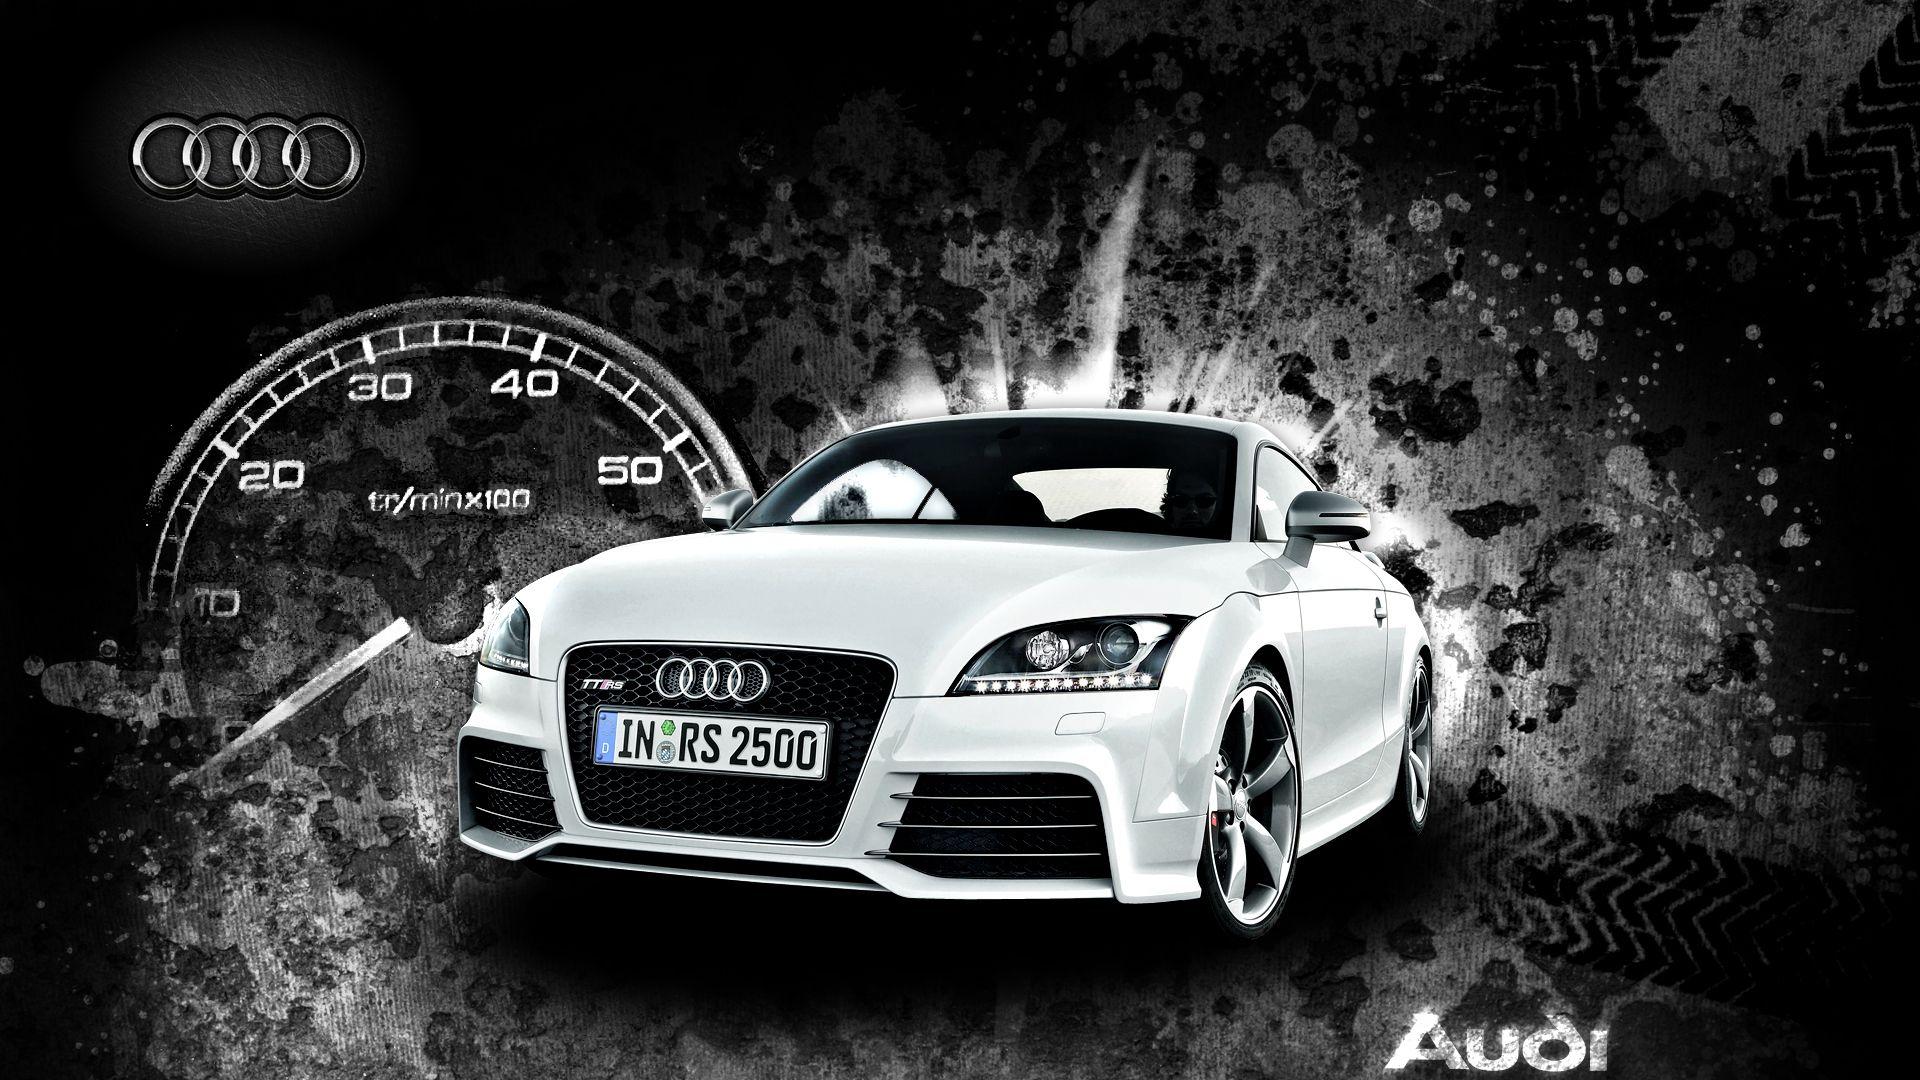 The Audi TT Forum • View topic RS Wallpaper